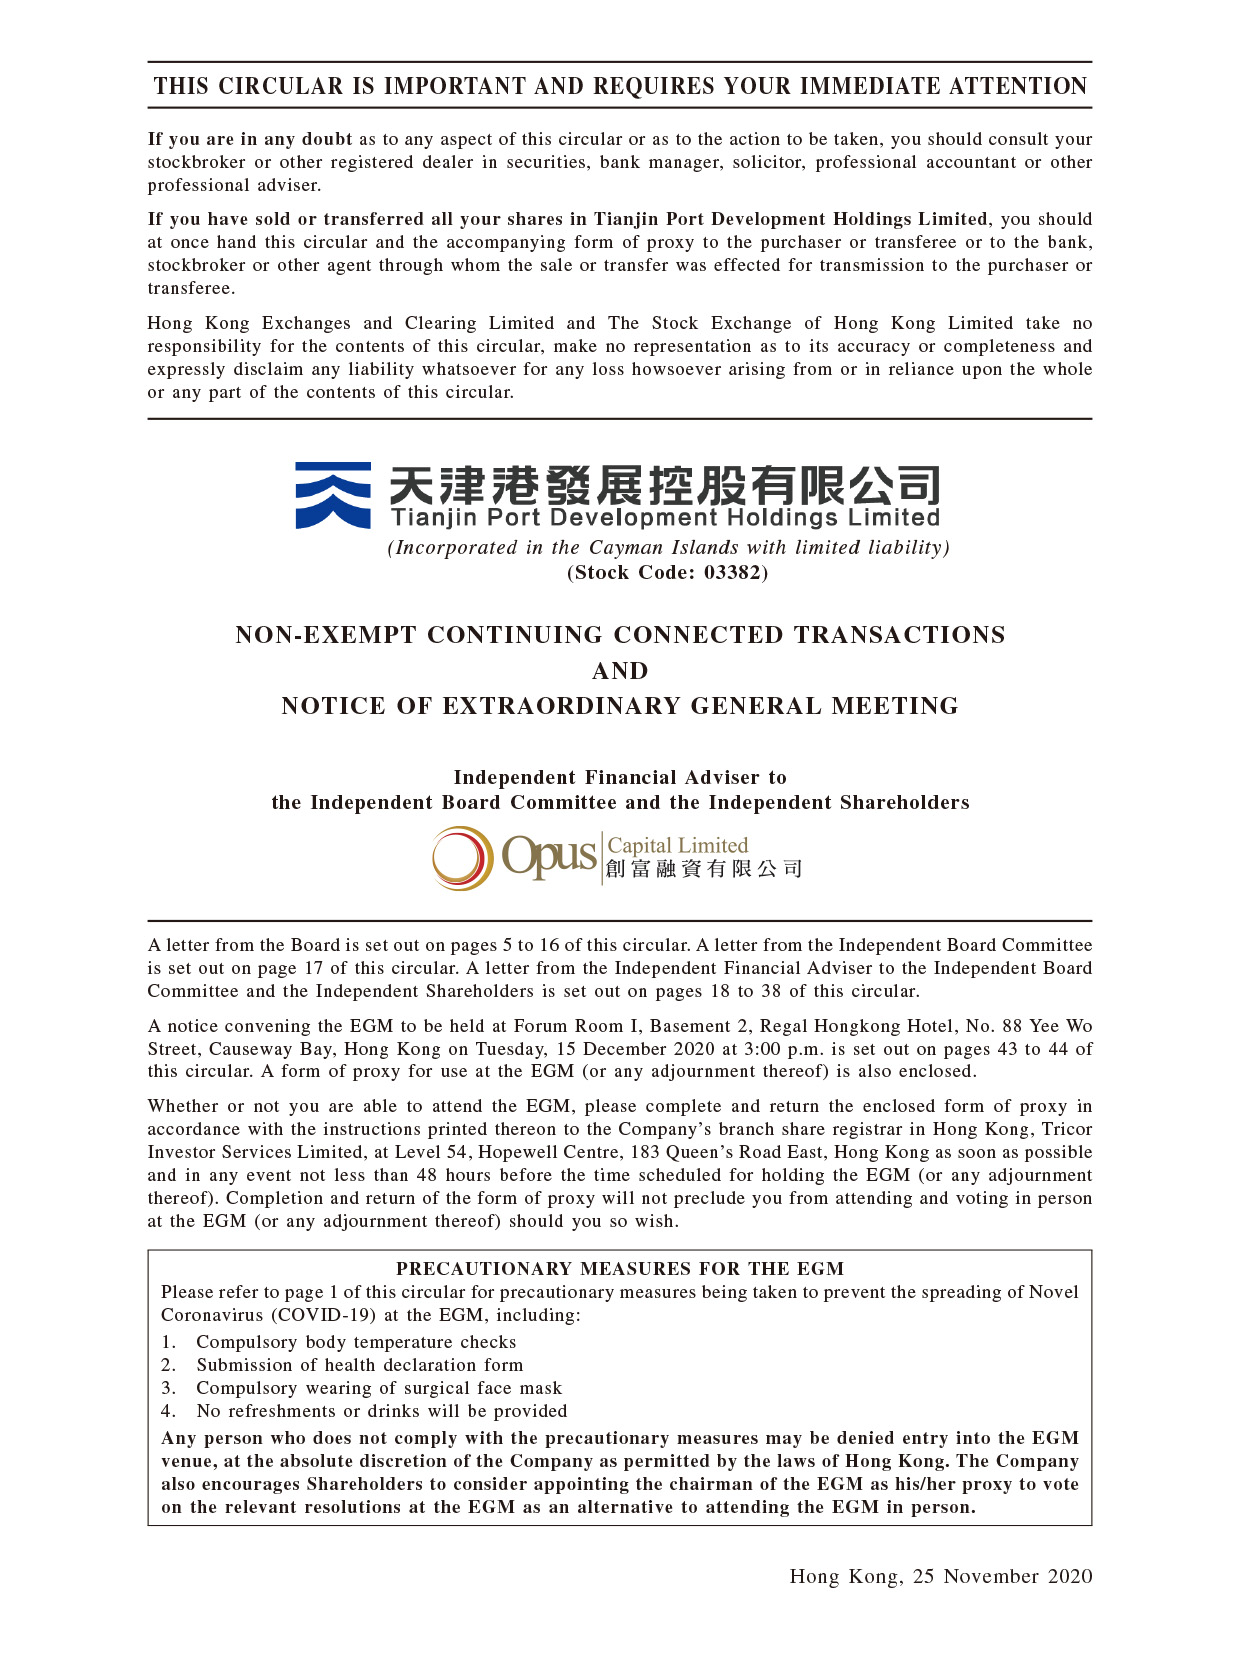 Tianjin Port Development Holdings Limited